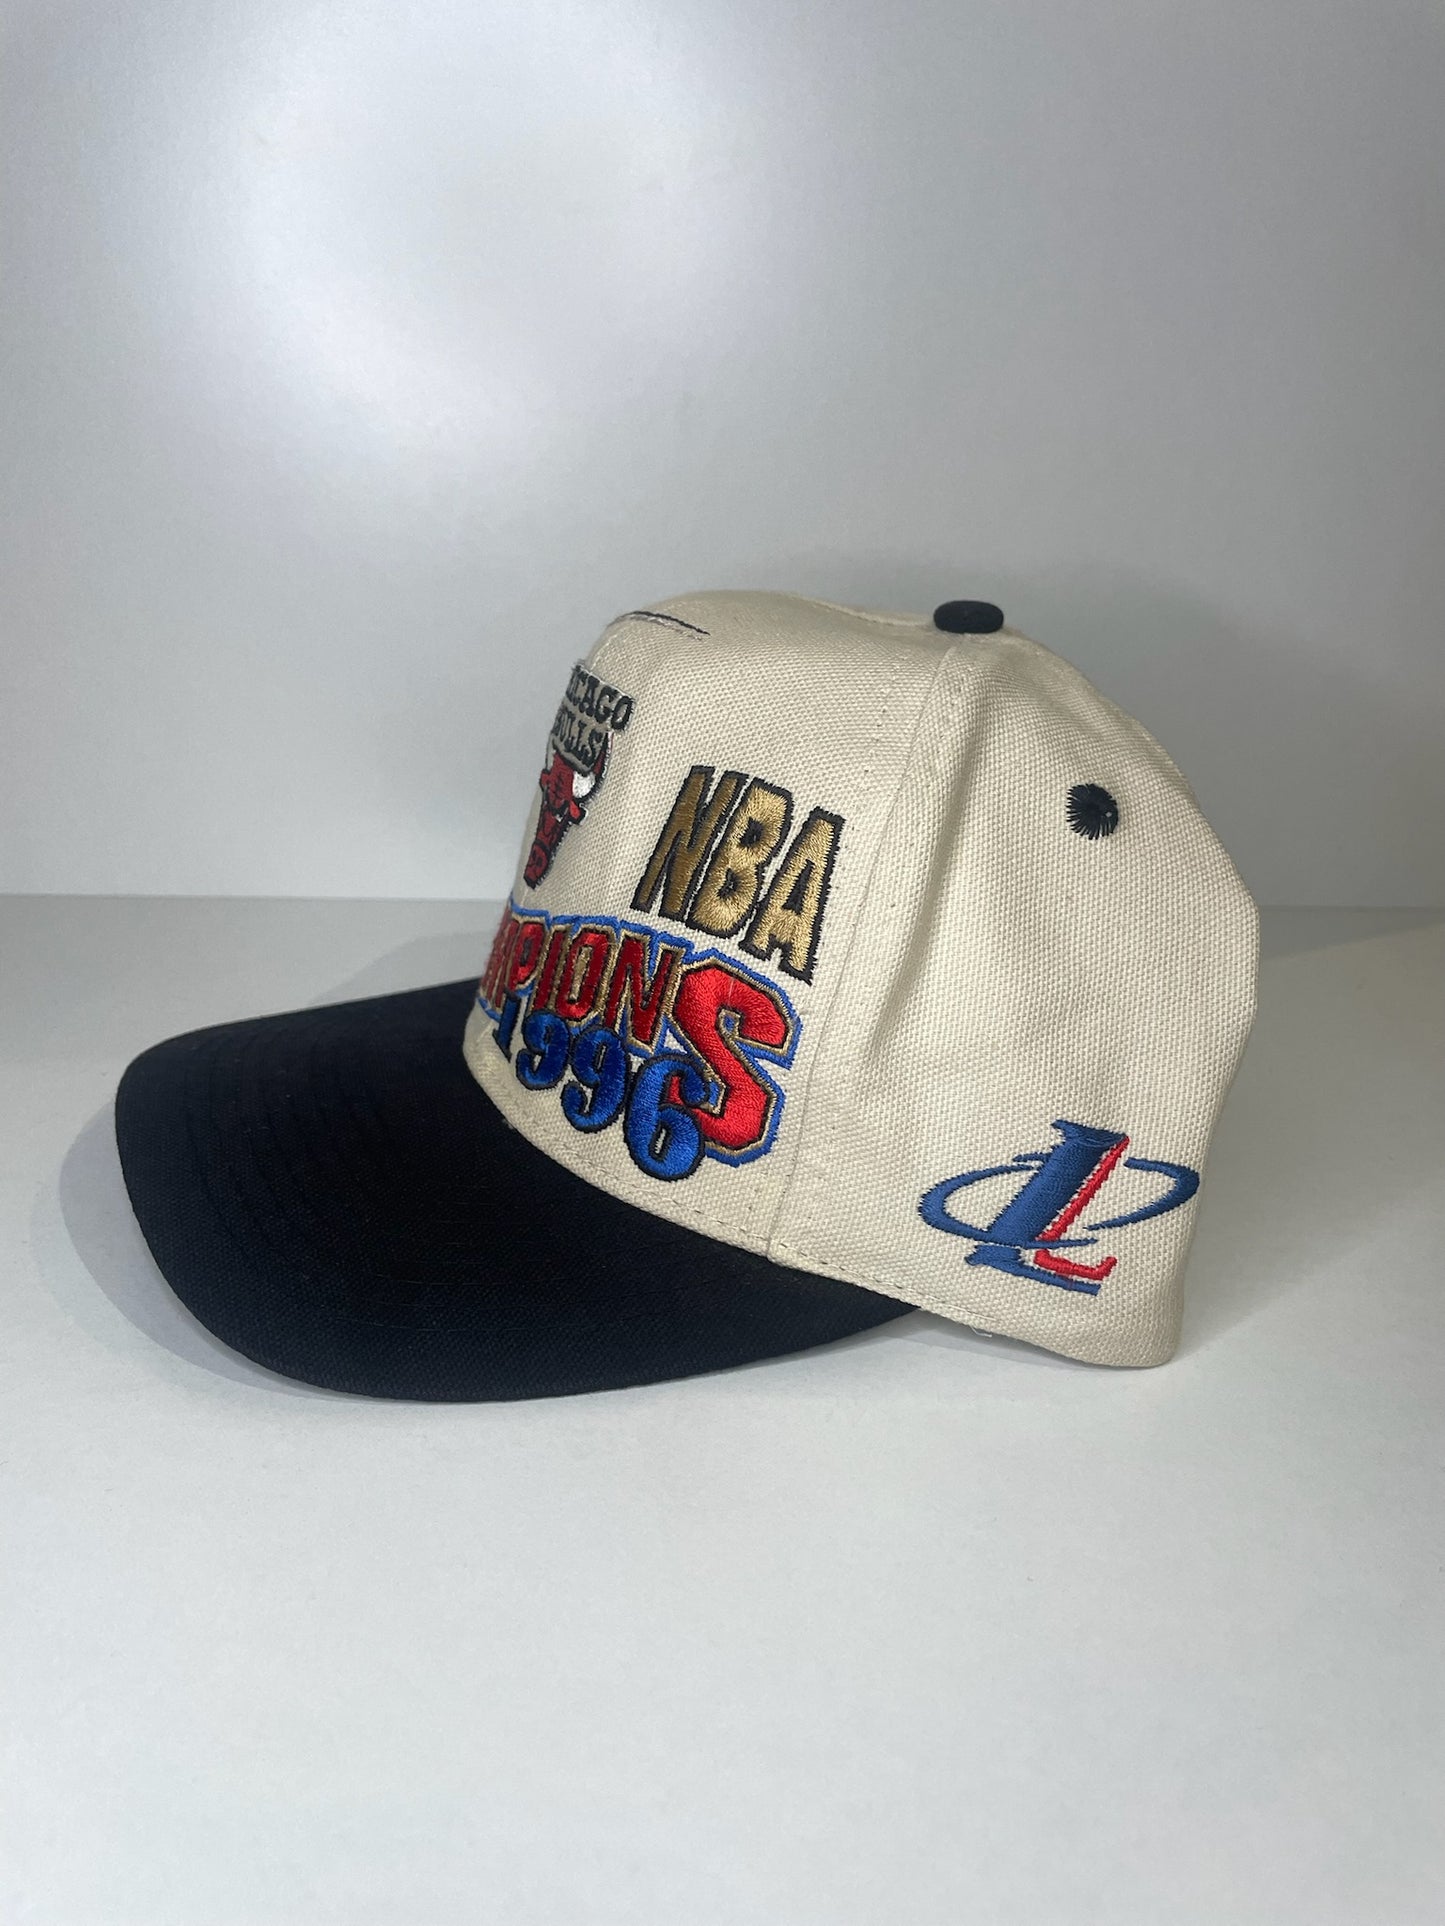 VINTAGE 90s CHICAGO BULLS "CHAMPION 1996" LOGO ATHLETIC SNAPBACK CAP HAT